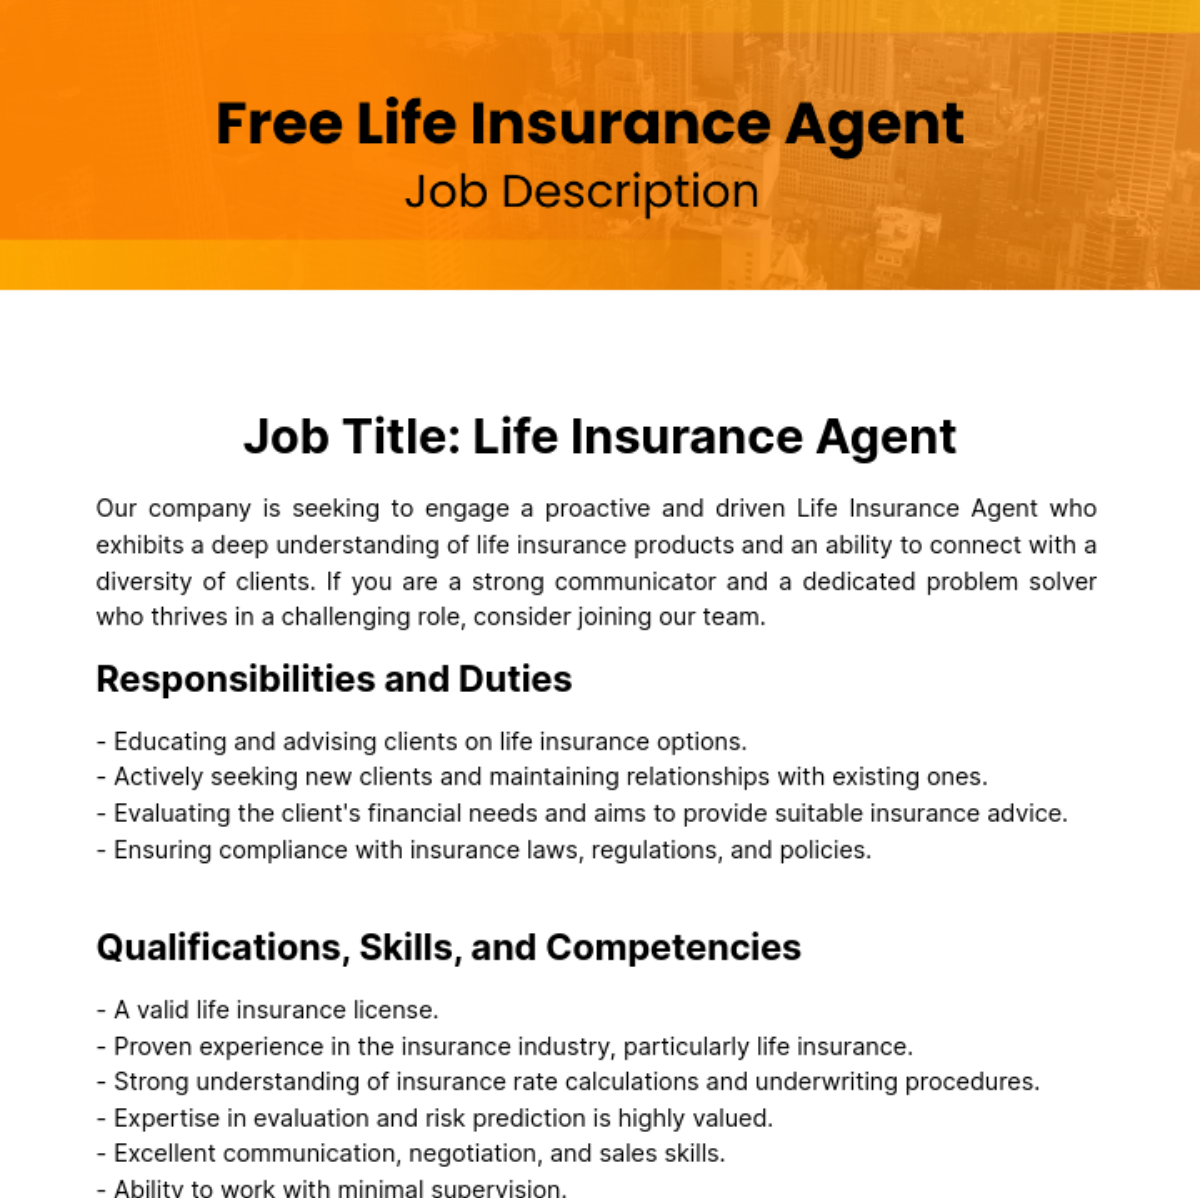 Free Life Insurance Agent Job Description Template